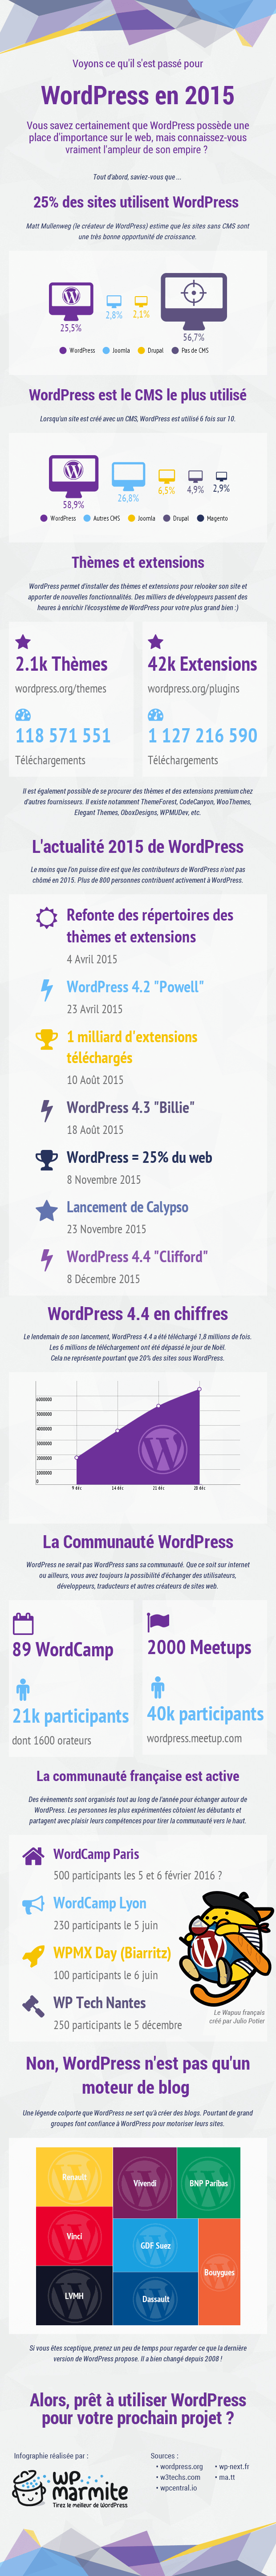 Infographie-WordPress-2015